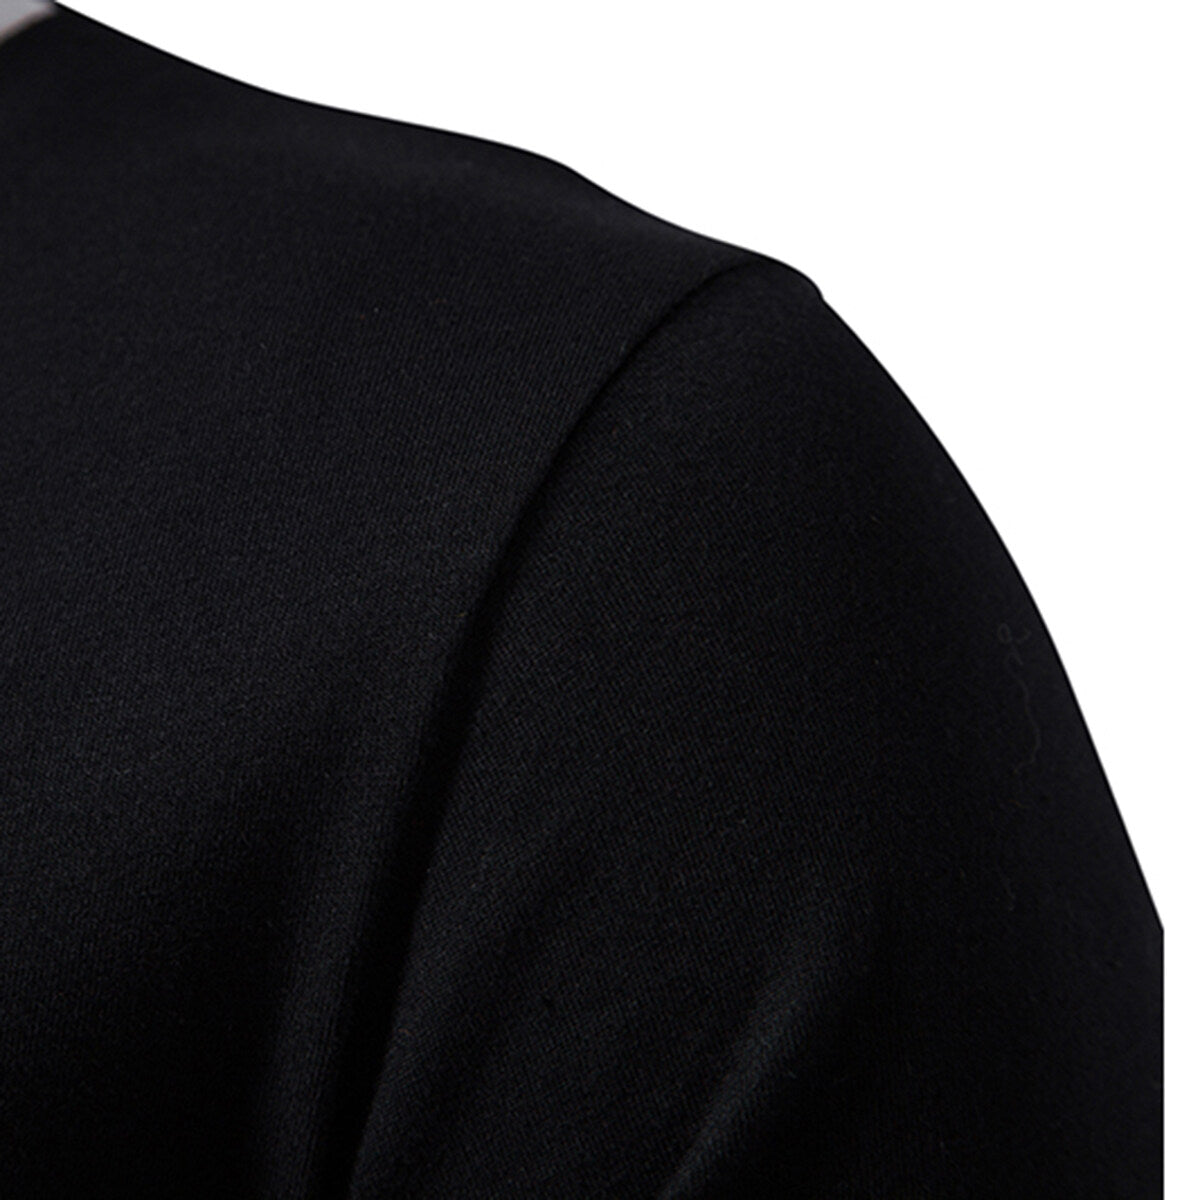 Men's Colorful Patchwork Polo Neck Short Sleeve T-Shirt Black